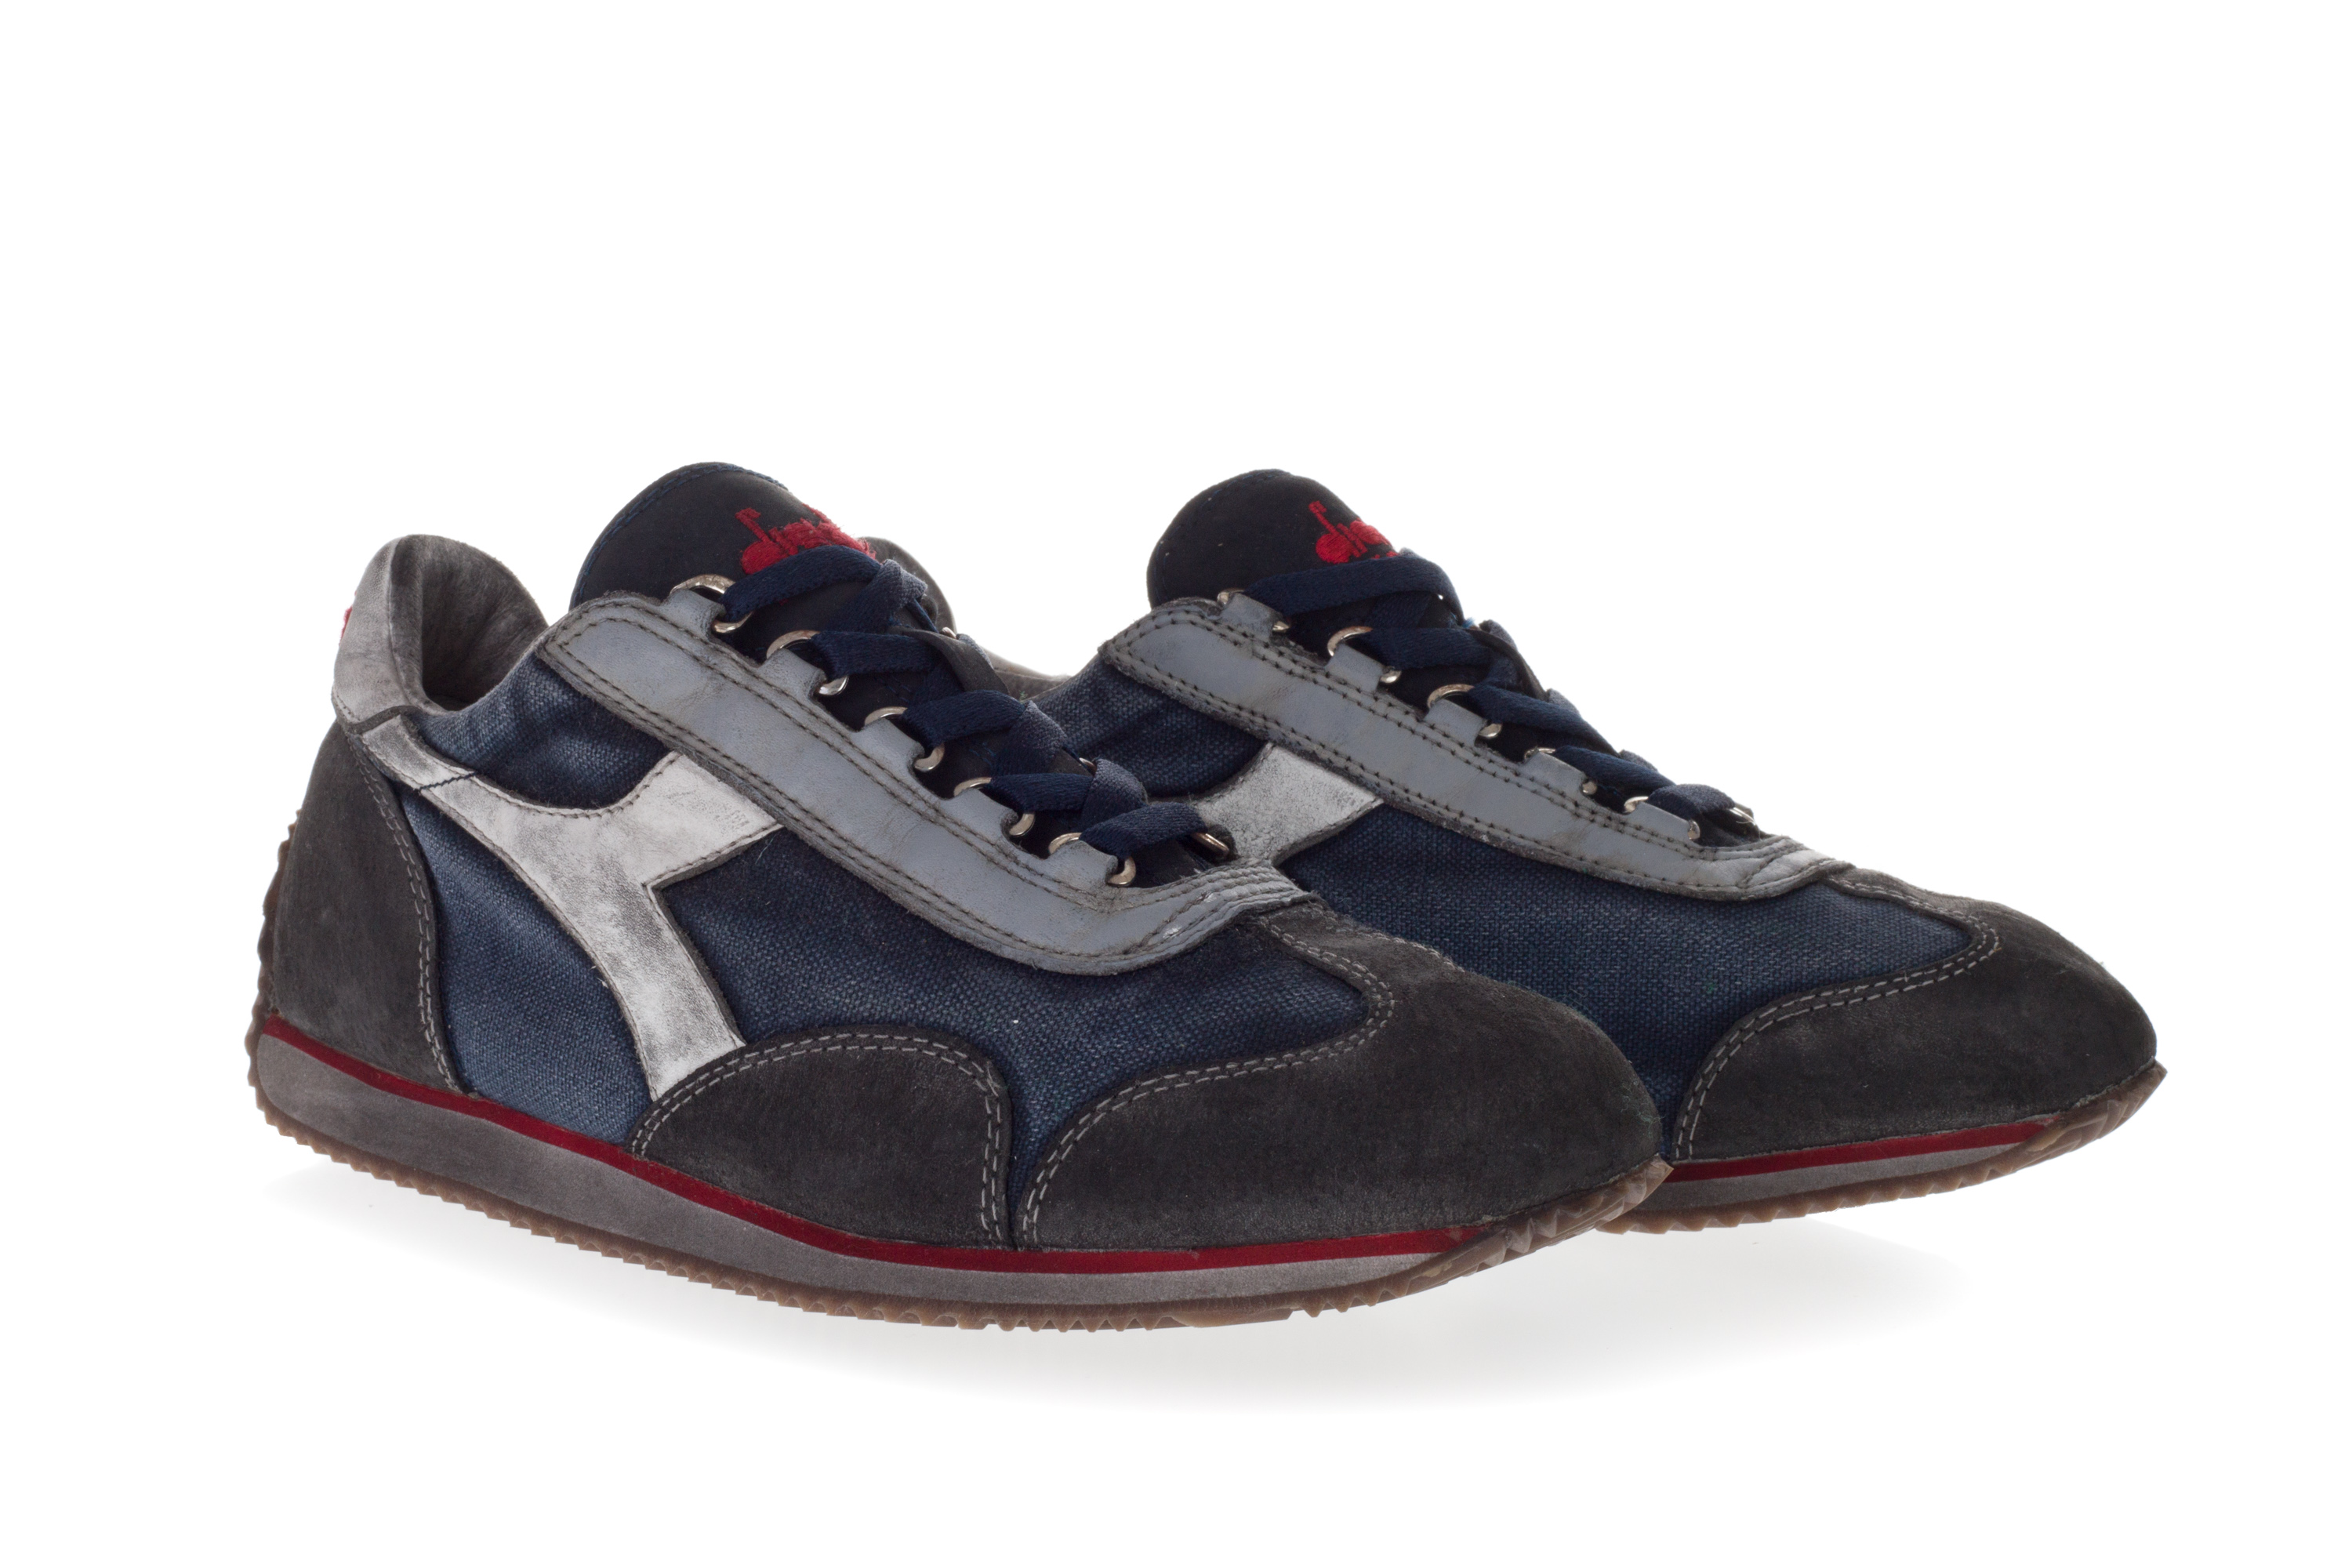 DIADORA HERITAGE EQUIPE Scarpe Sneakers Uomo Donna STONE WASH 12 DIRTY 11  EVO | eBay